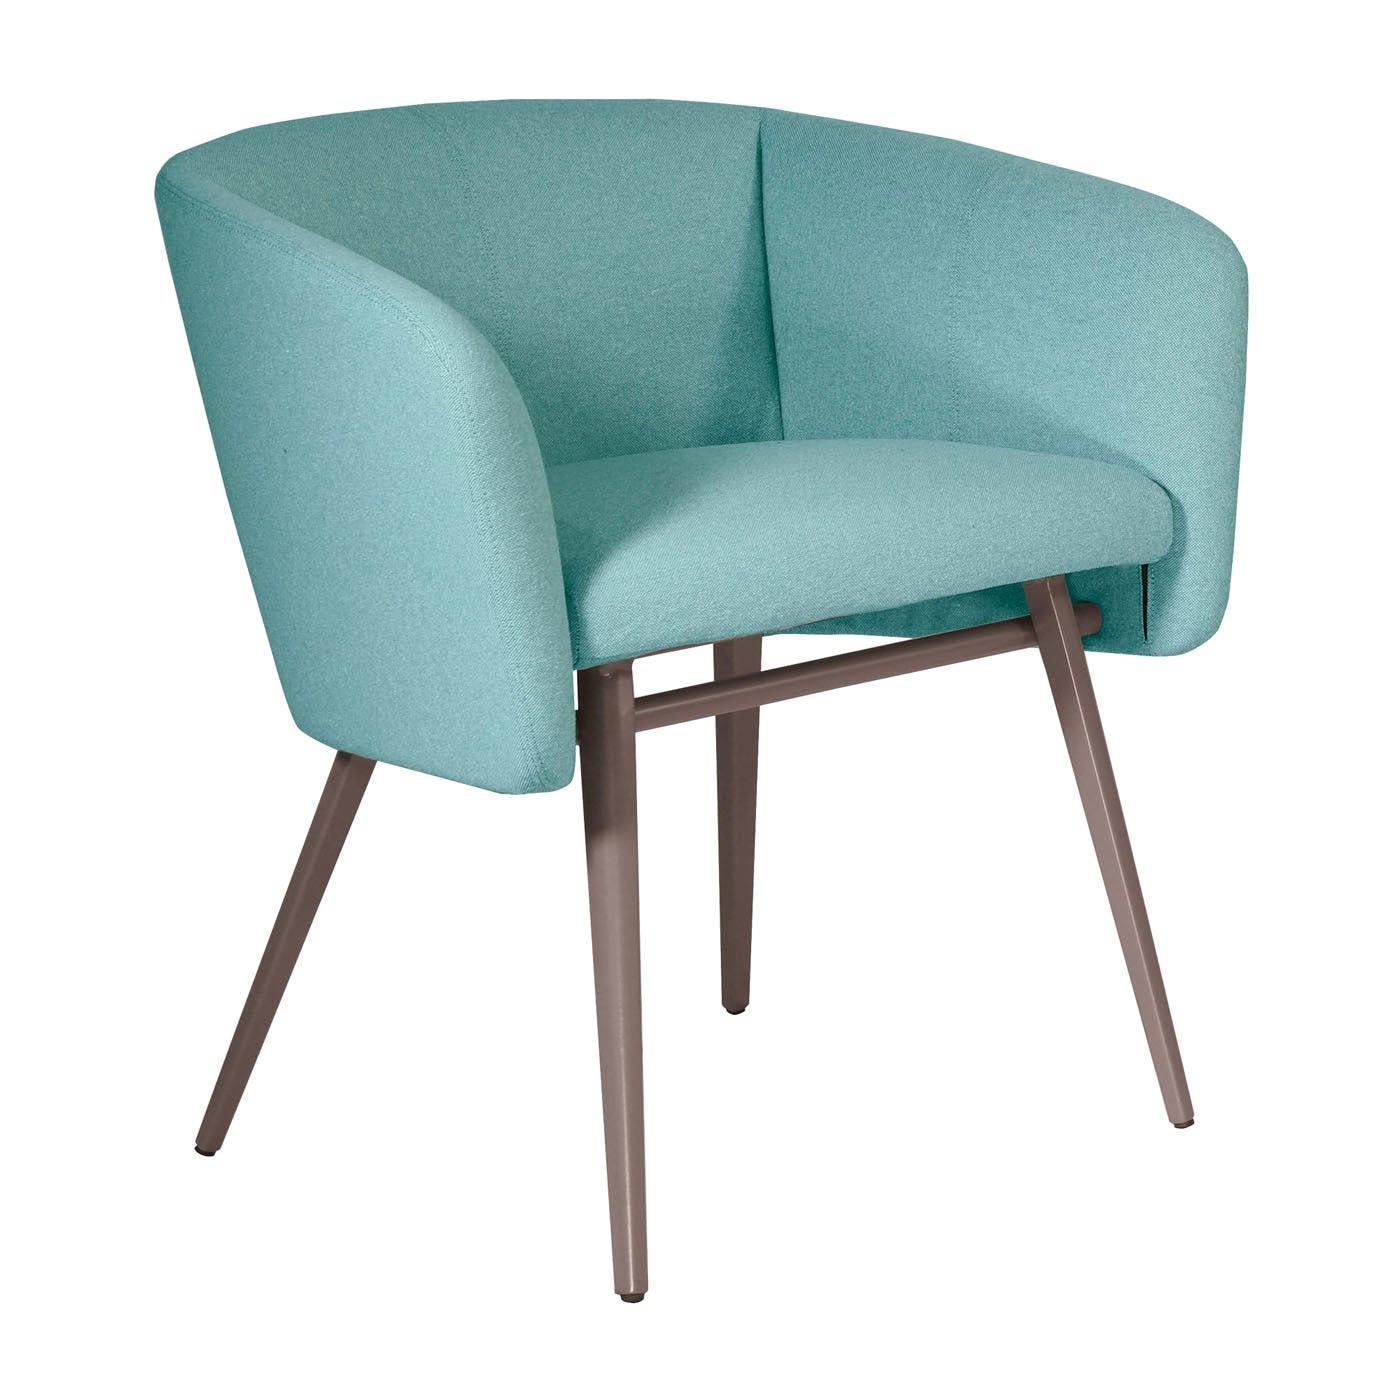 Balù Met Light Blue and Gray Chair by Emilio Nanni